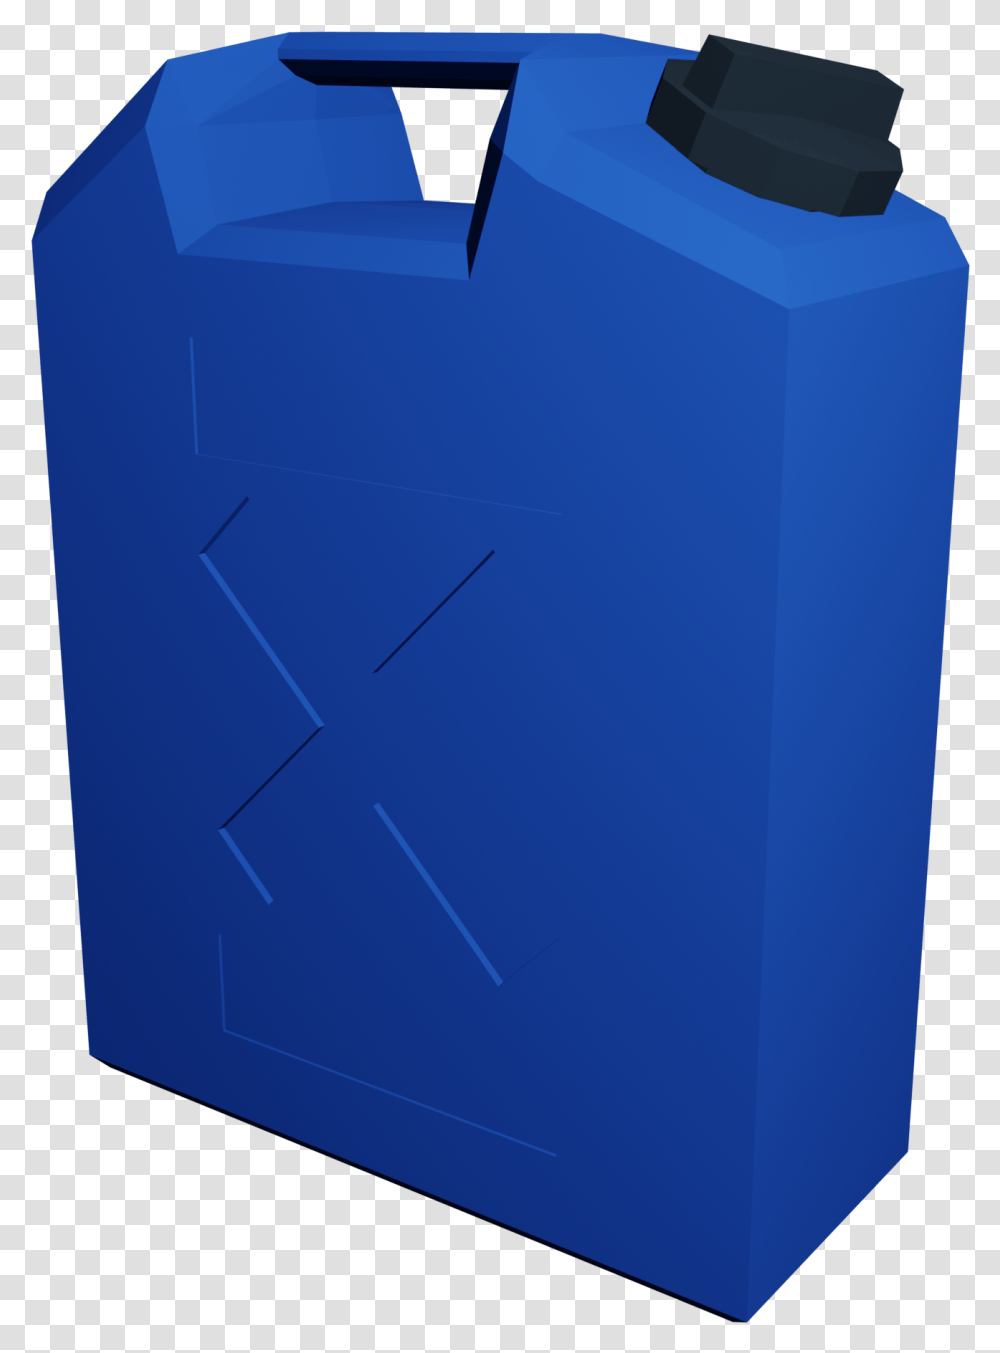 Water Jug Water Jug Skyblock Roblox, File Binder, File Folder, Box, Carton Transparent Png